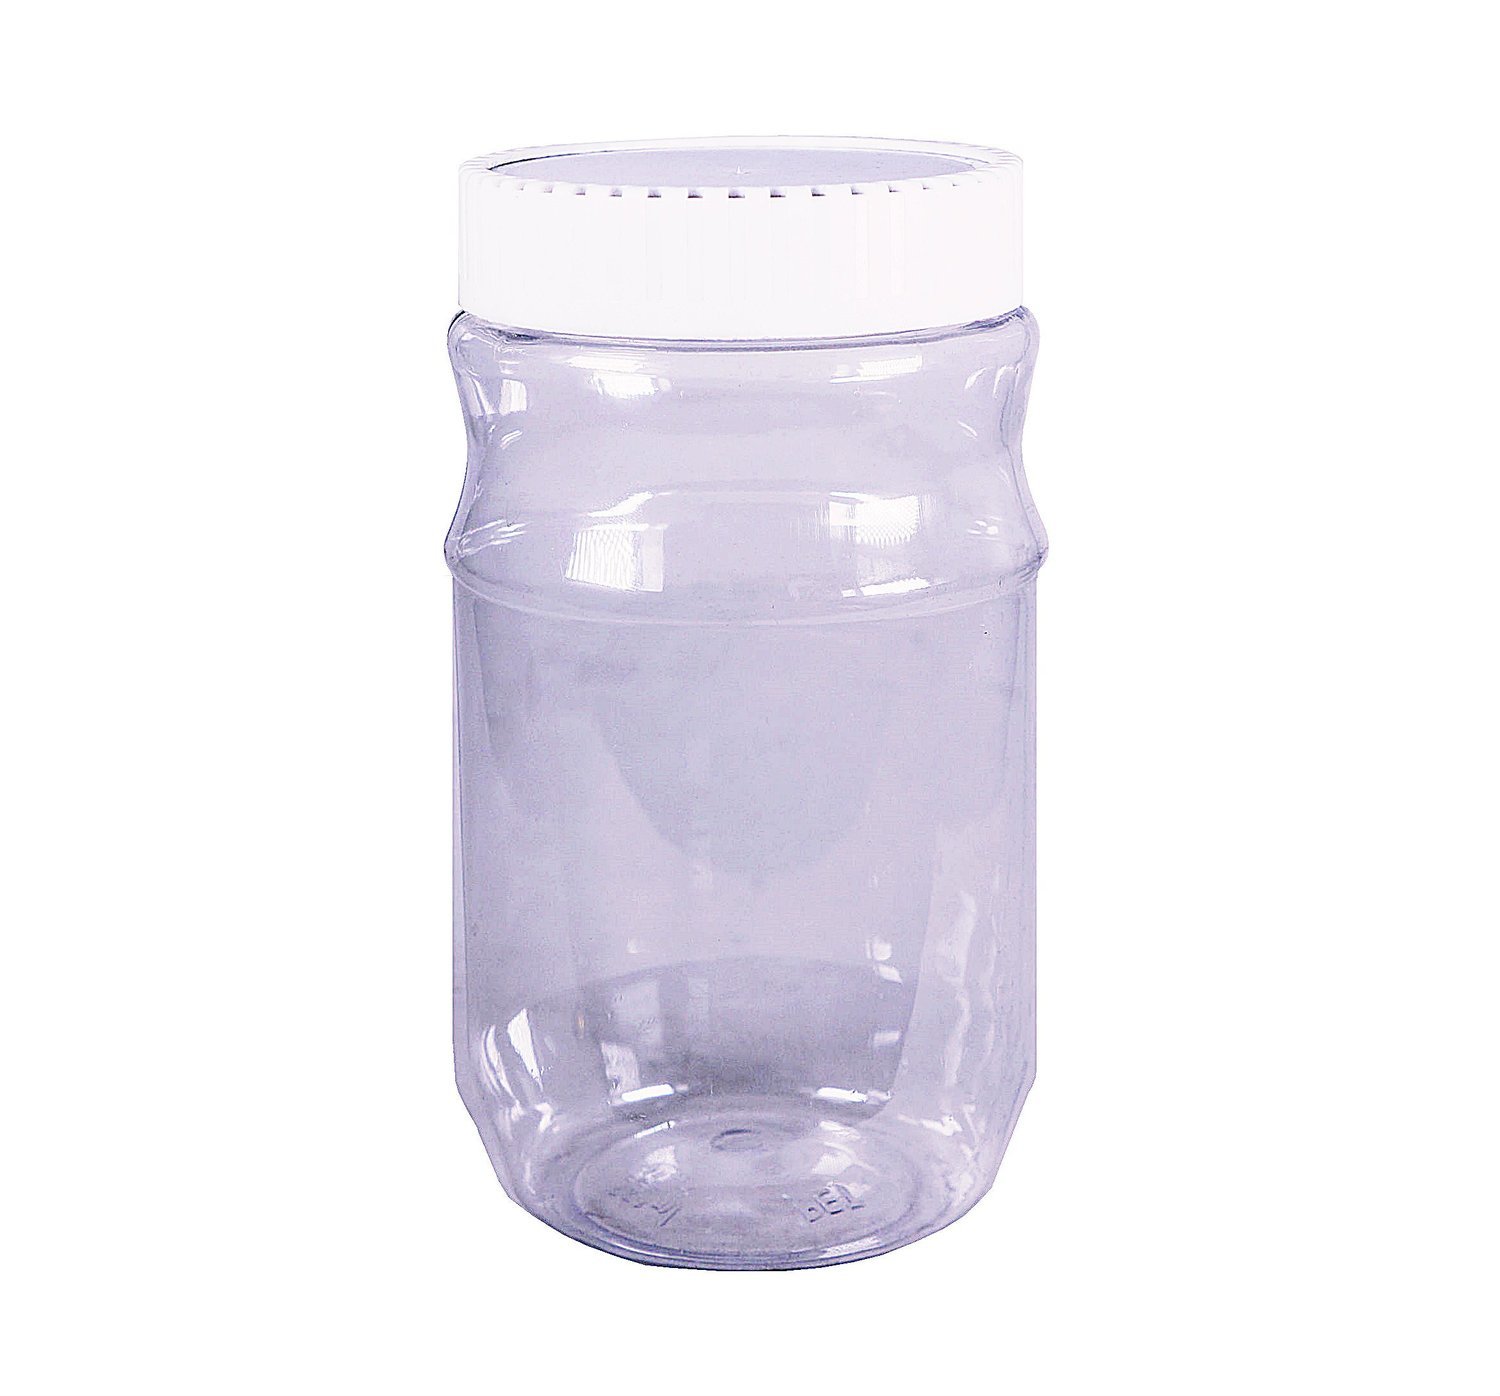 550ml, PET, Cylindrical Jar, White Cap